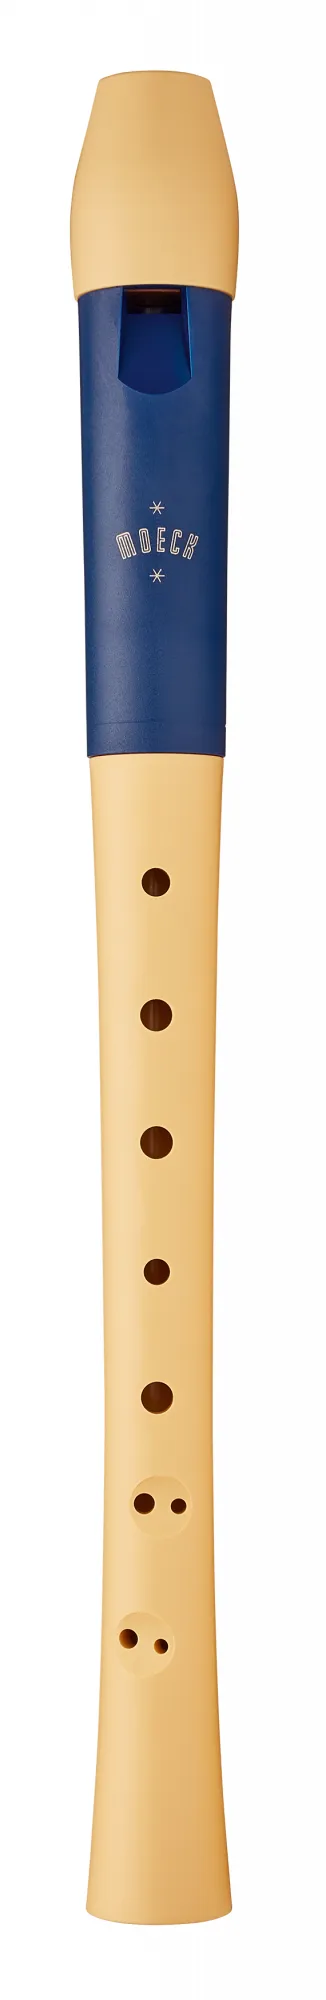 Flauto 1 Blockflöte barock